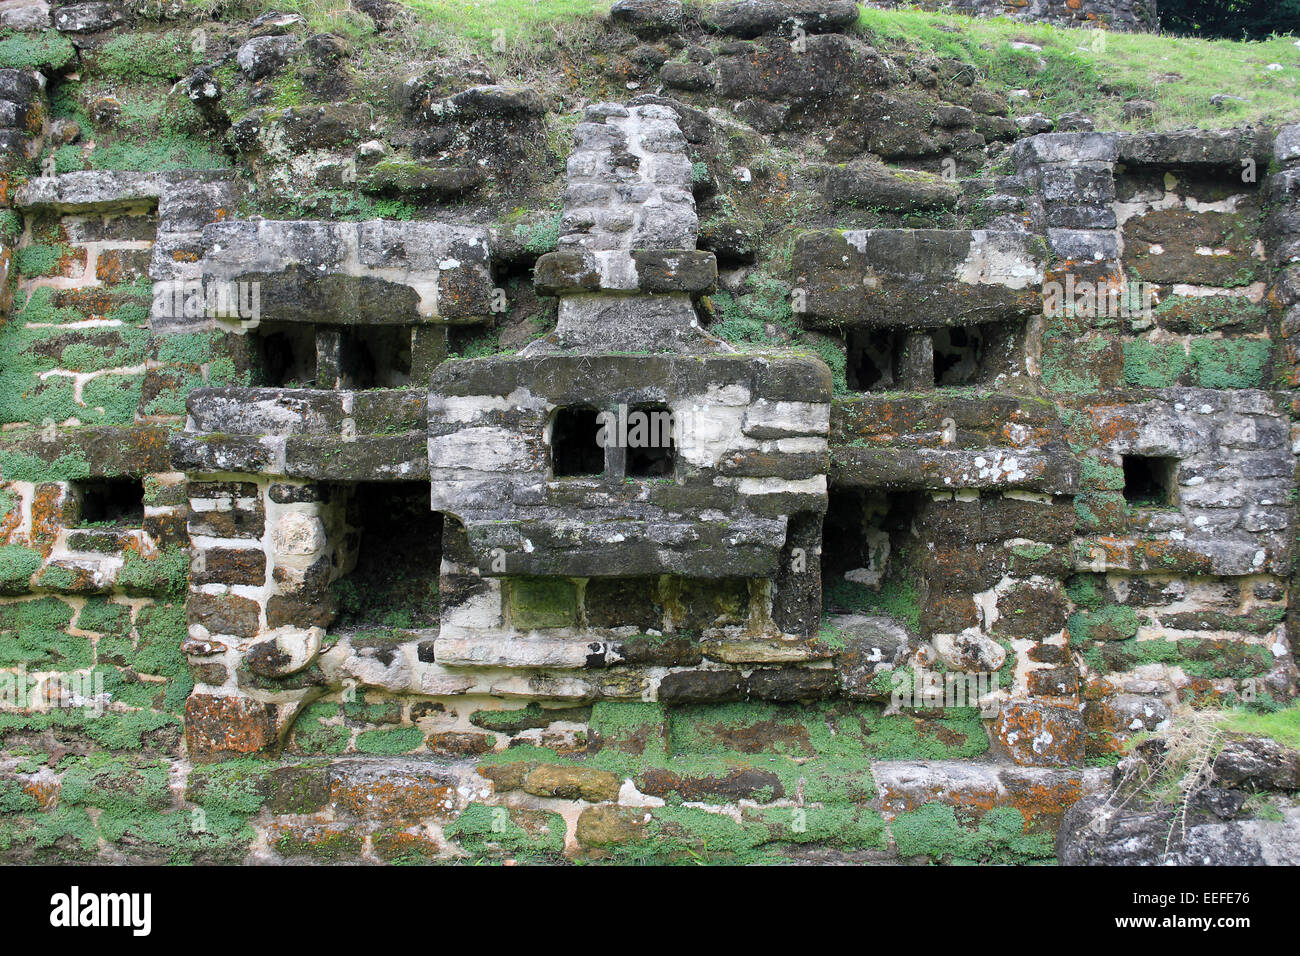 Jaguar Temple At The Archaeological Site Of Lamanai, Belize Stock Photo